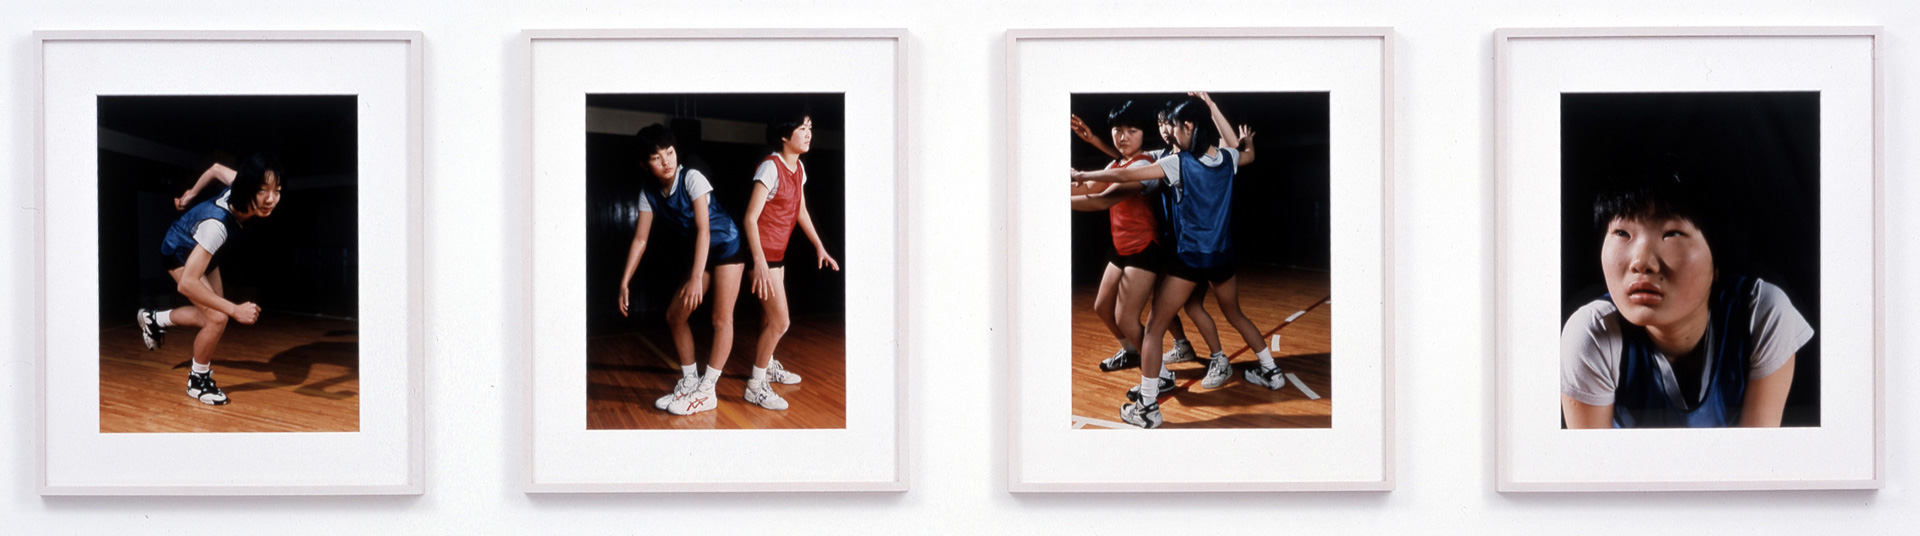 Sharon Lockhart - Goshogaoka Girls Basketball Team: Group III: (a) Chihiro Nishijima; (b) Sayaka Miyamoto & Takako Yamada; (c) Kumiko Shirai & Eri Hashimoto; (d) Kumiko Kotaka, 1997, four framed chromogenic prints